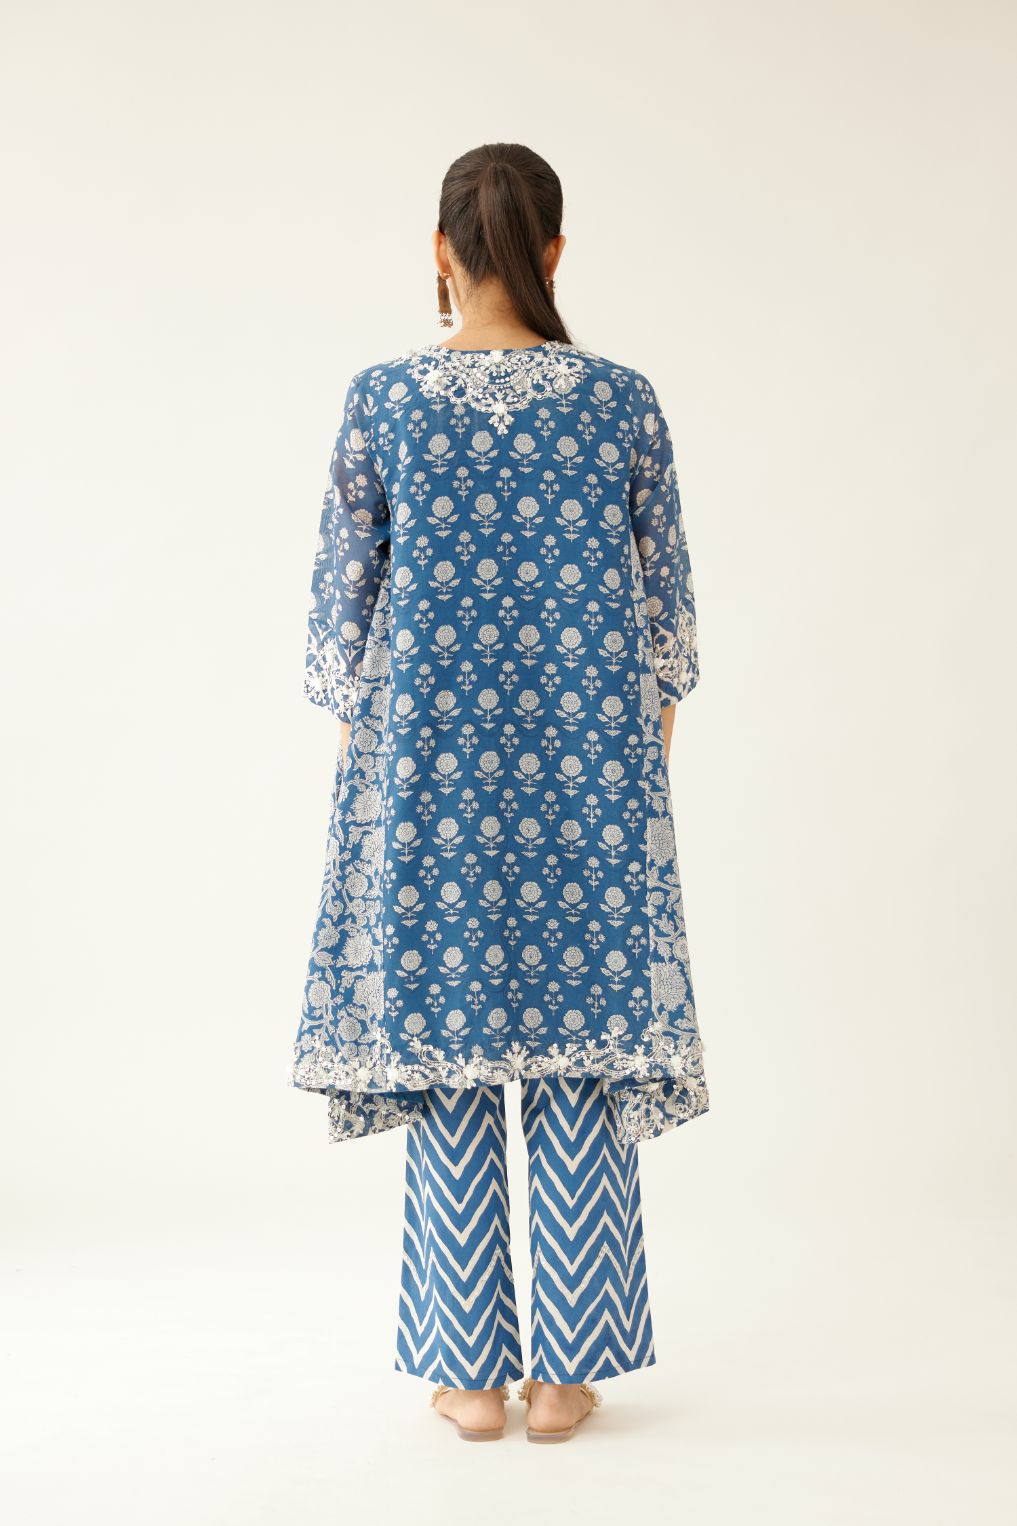 Blue hand block printed short kalidar kurta set highlighted with sequins, tassels and bead work.